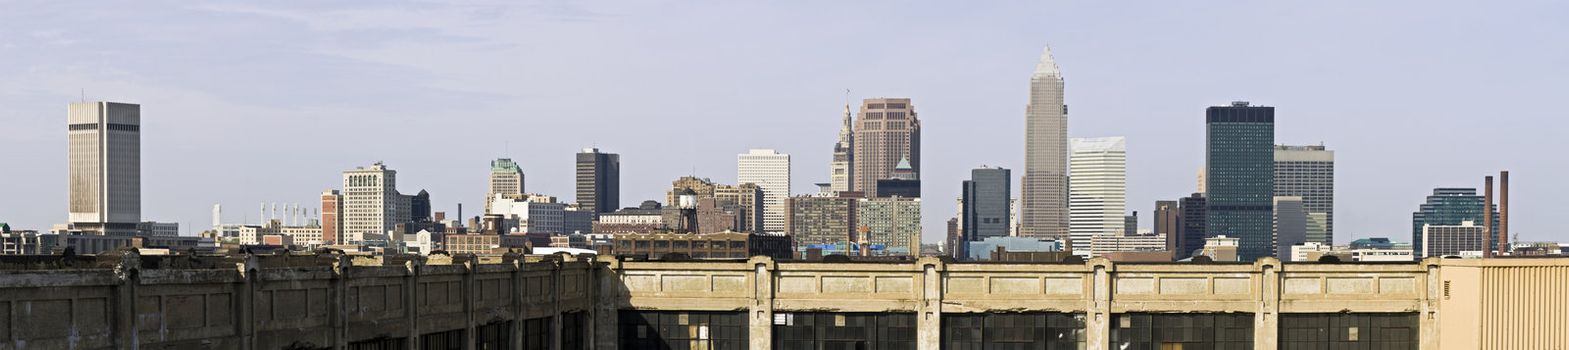 XXXL Panorama of Downtown Cleveland, Ohio.